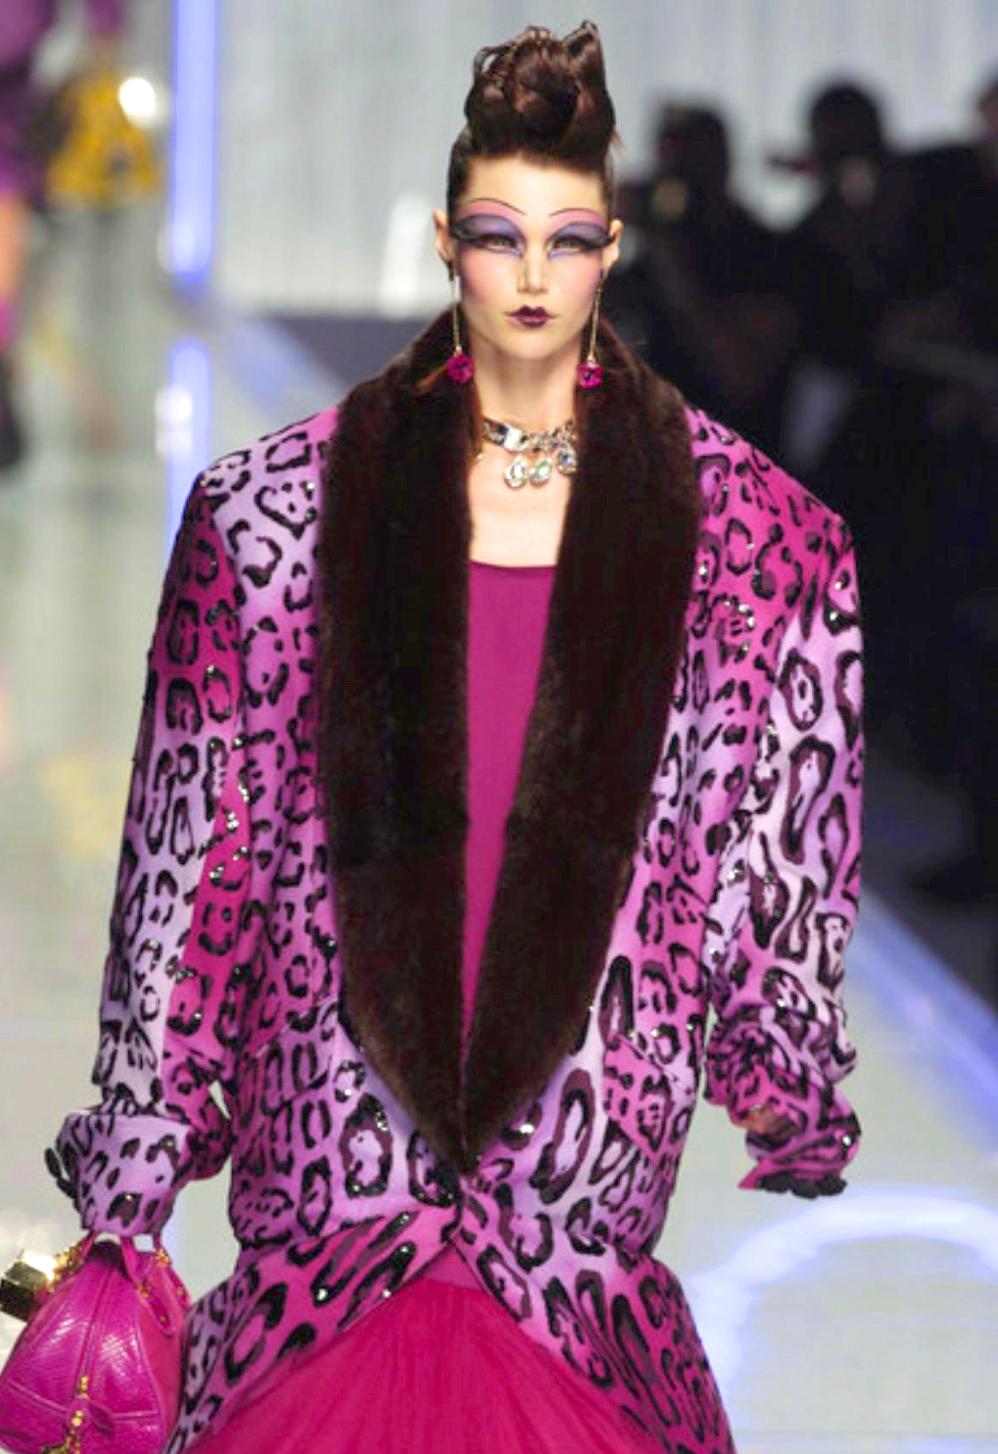 Christian Dior by John Galliano 2004 Purple Cheetah Embellished Slip. Taille 44 FR / US 16.

Condit :
Neuf avec étiquettes.

Composition :
30% de soie
32% Polyamide
30 % coton
08% Elastan